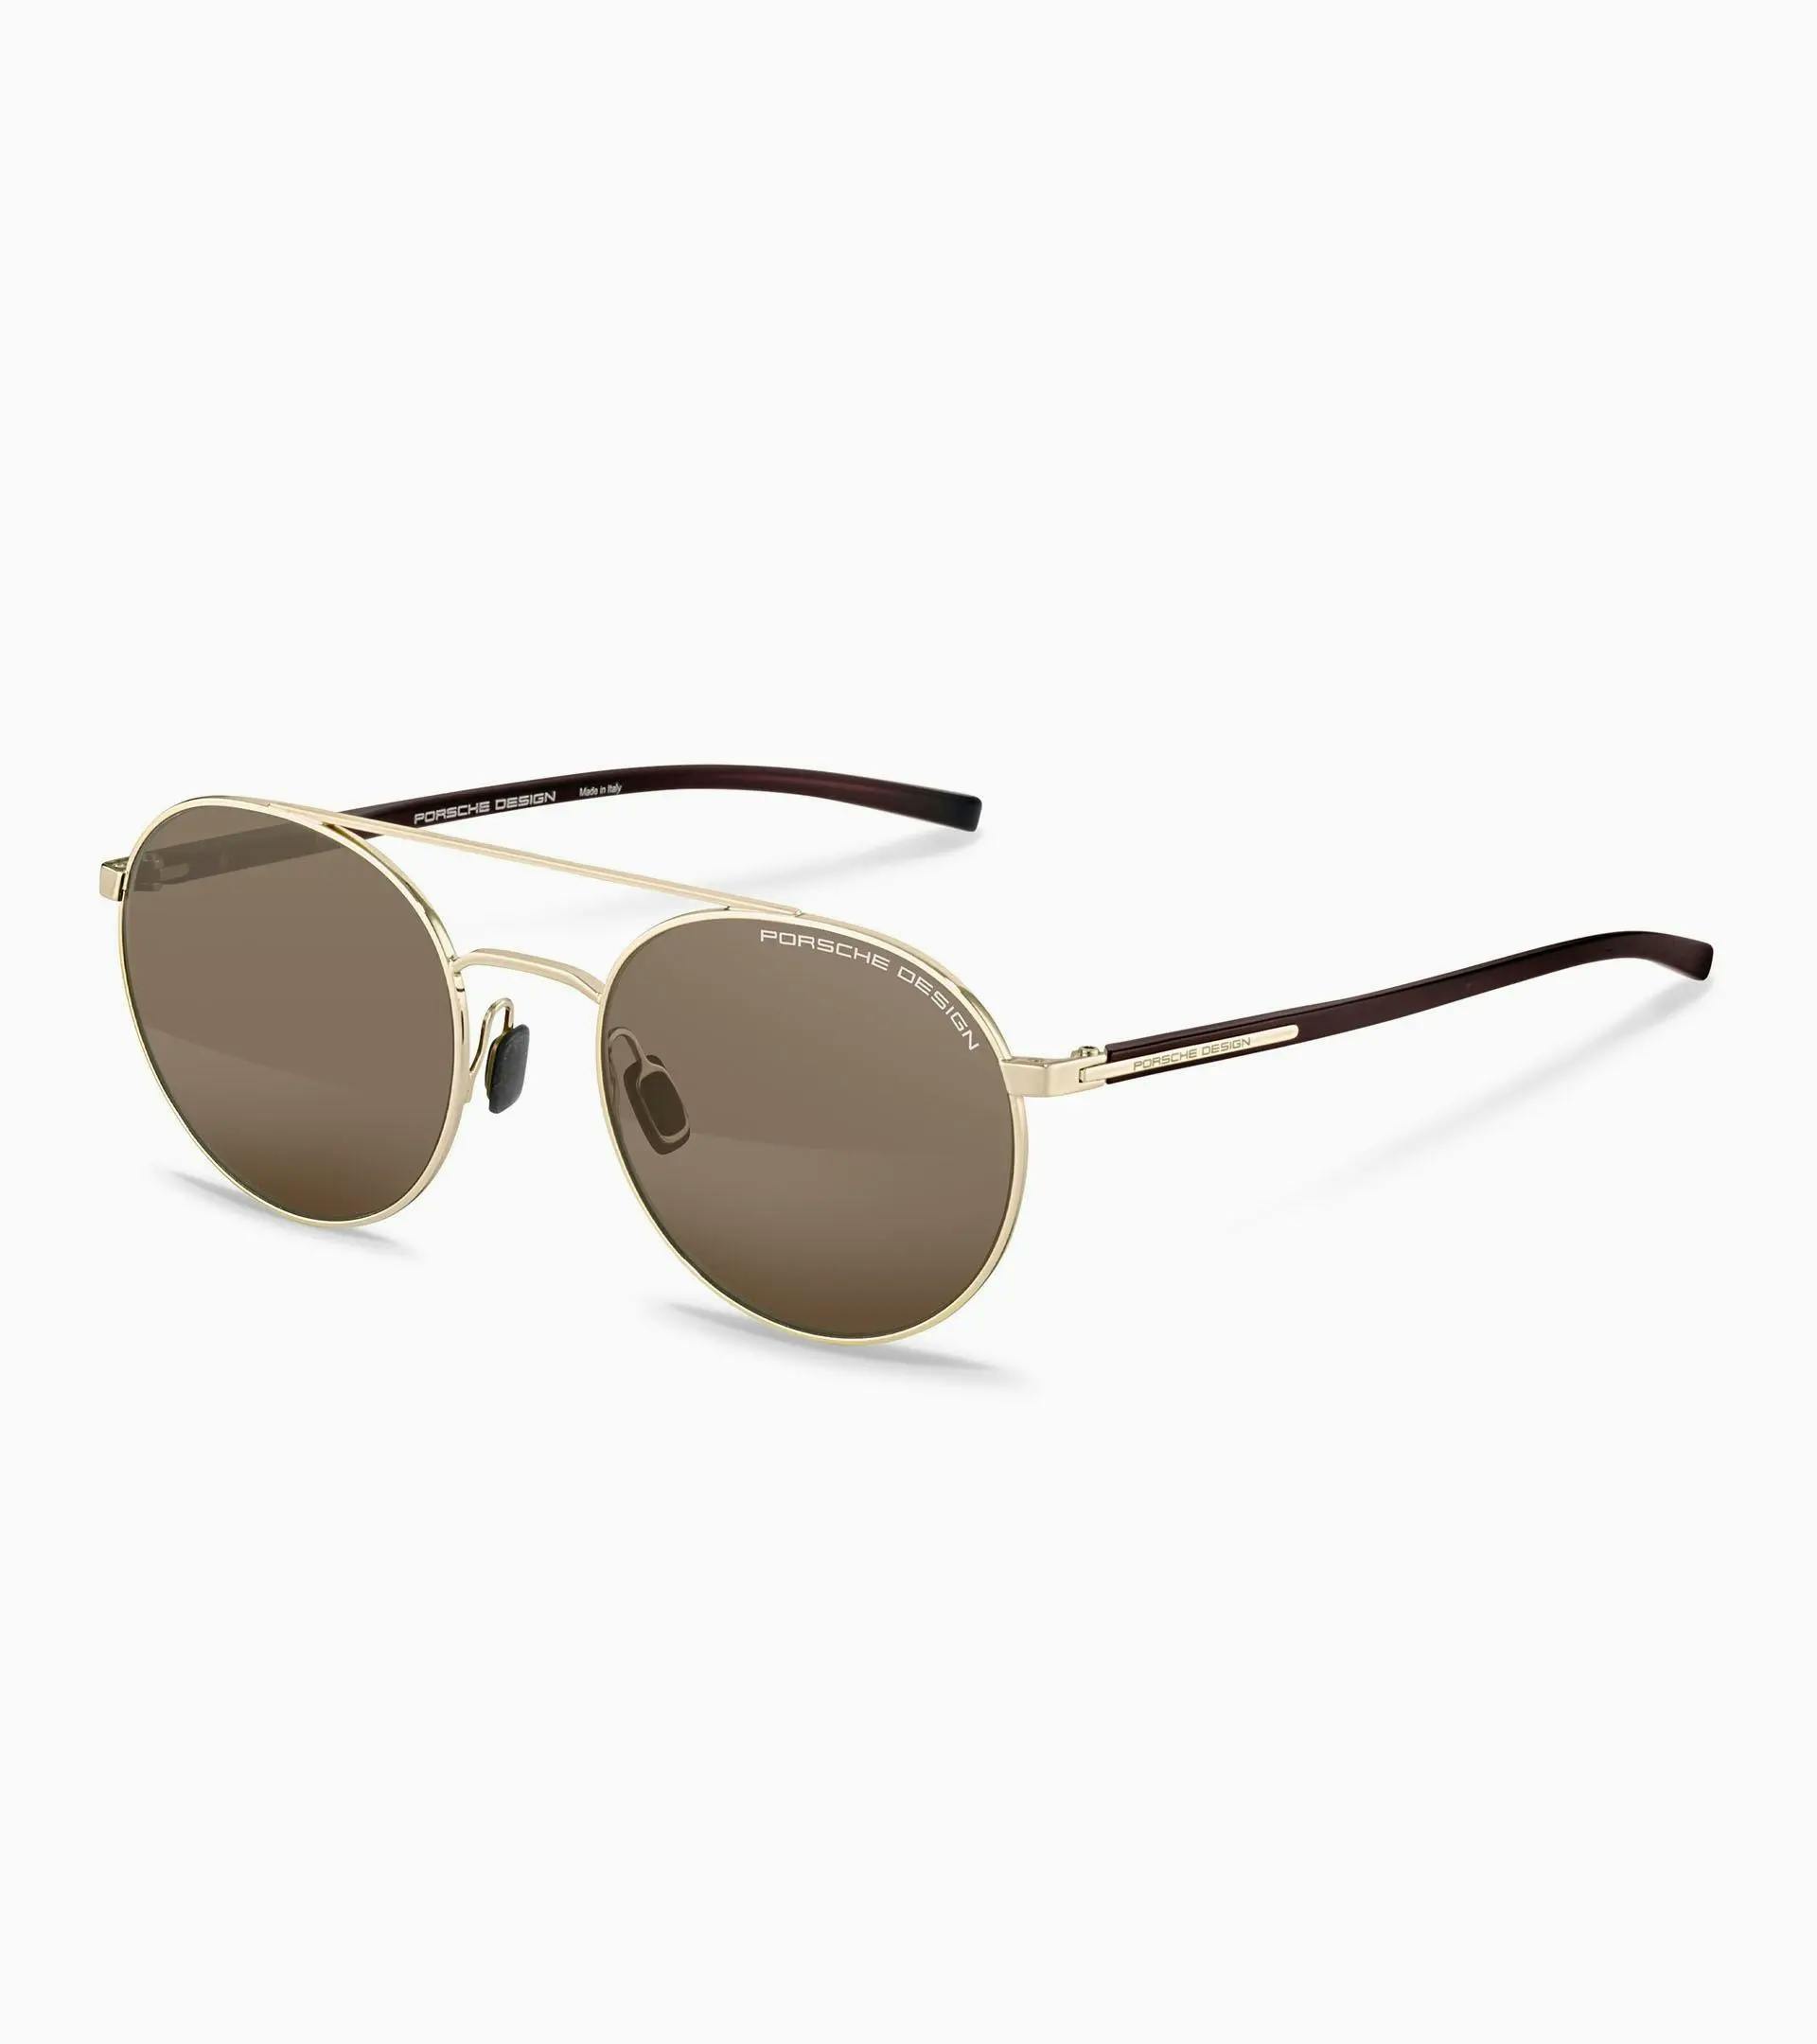 Shop Double Bridge Glasses and Sunglasses